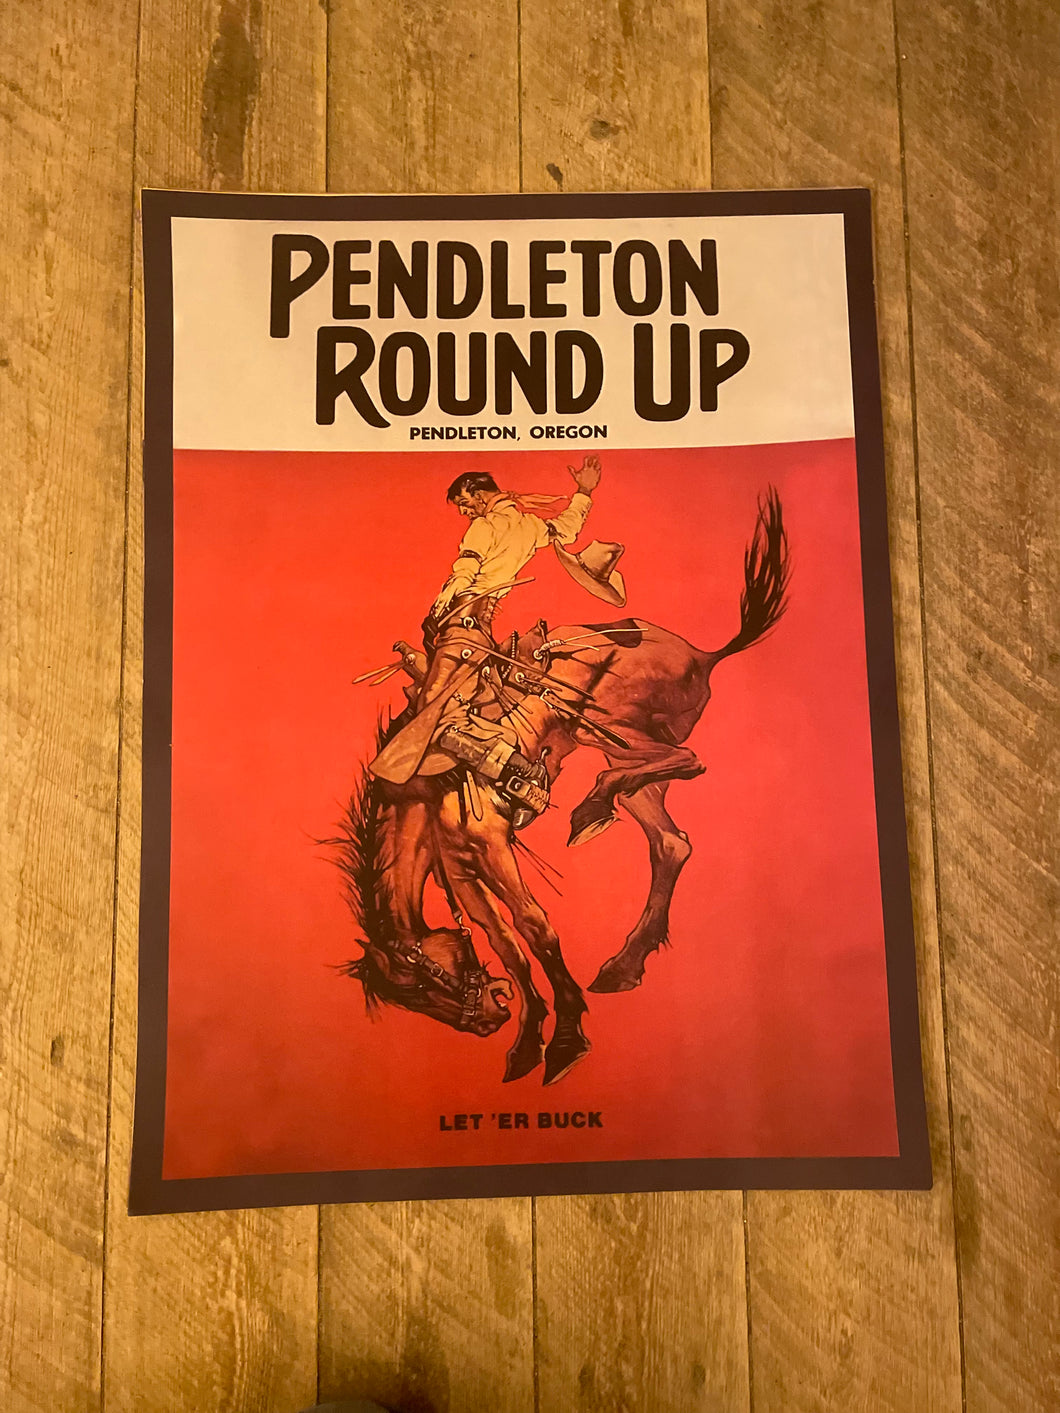 Pendleton round up